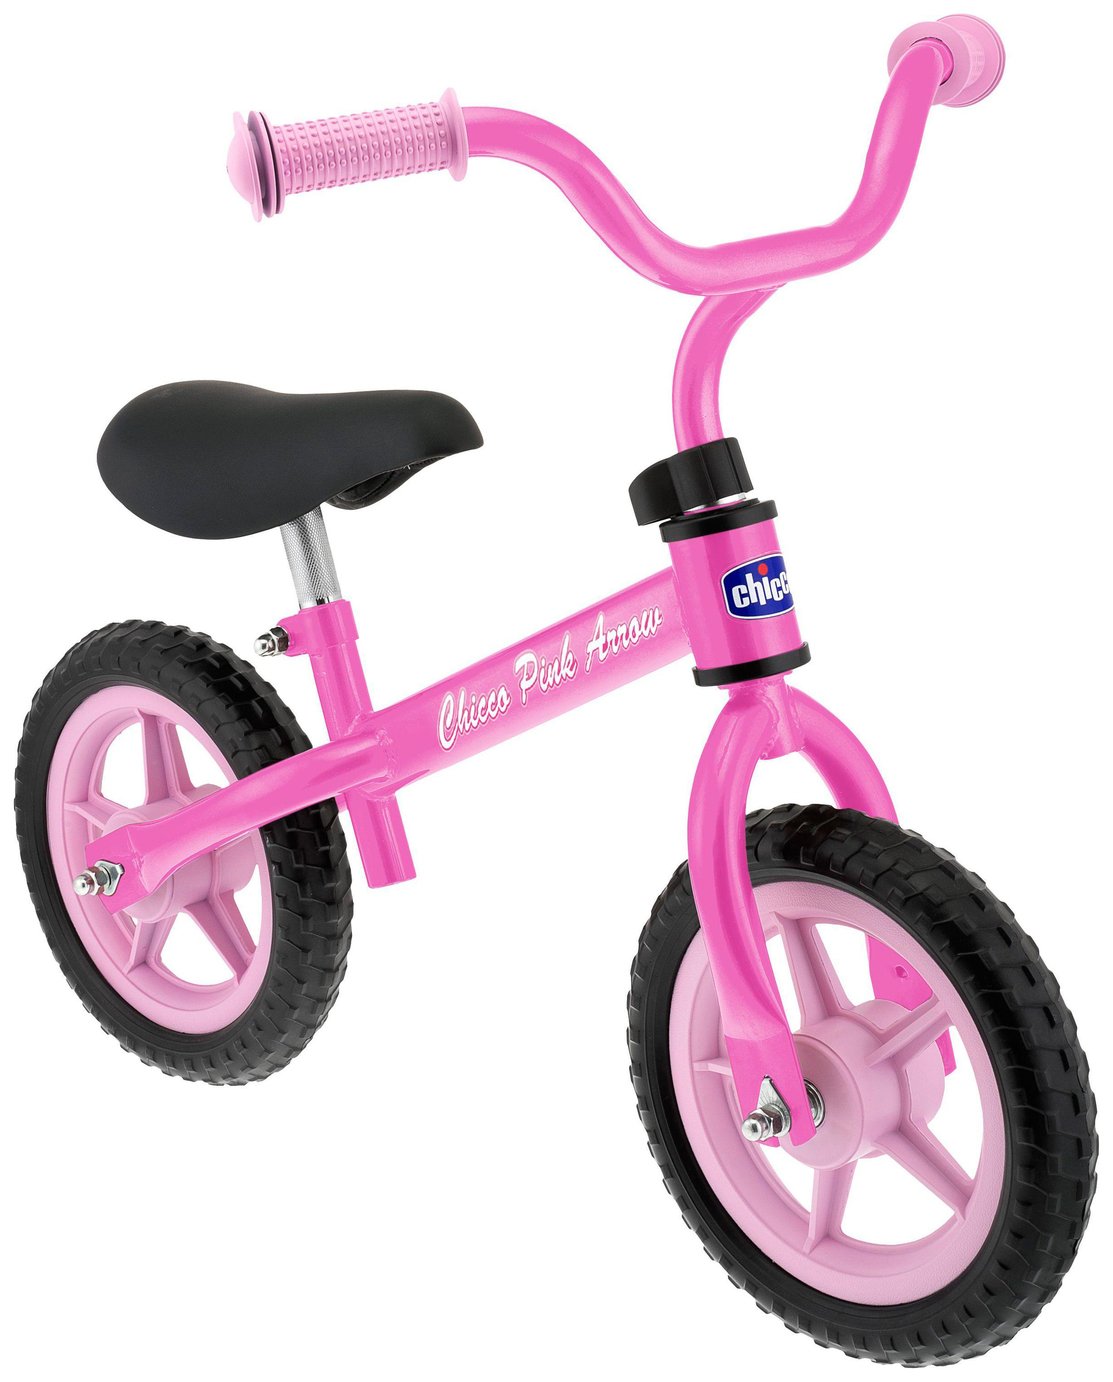 Chicco Pink Arrow 11 inch Wheel Size Kids Balance Bike